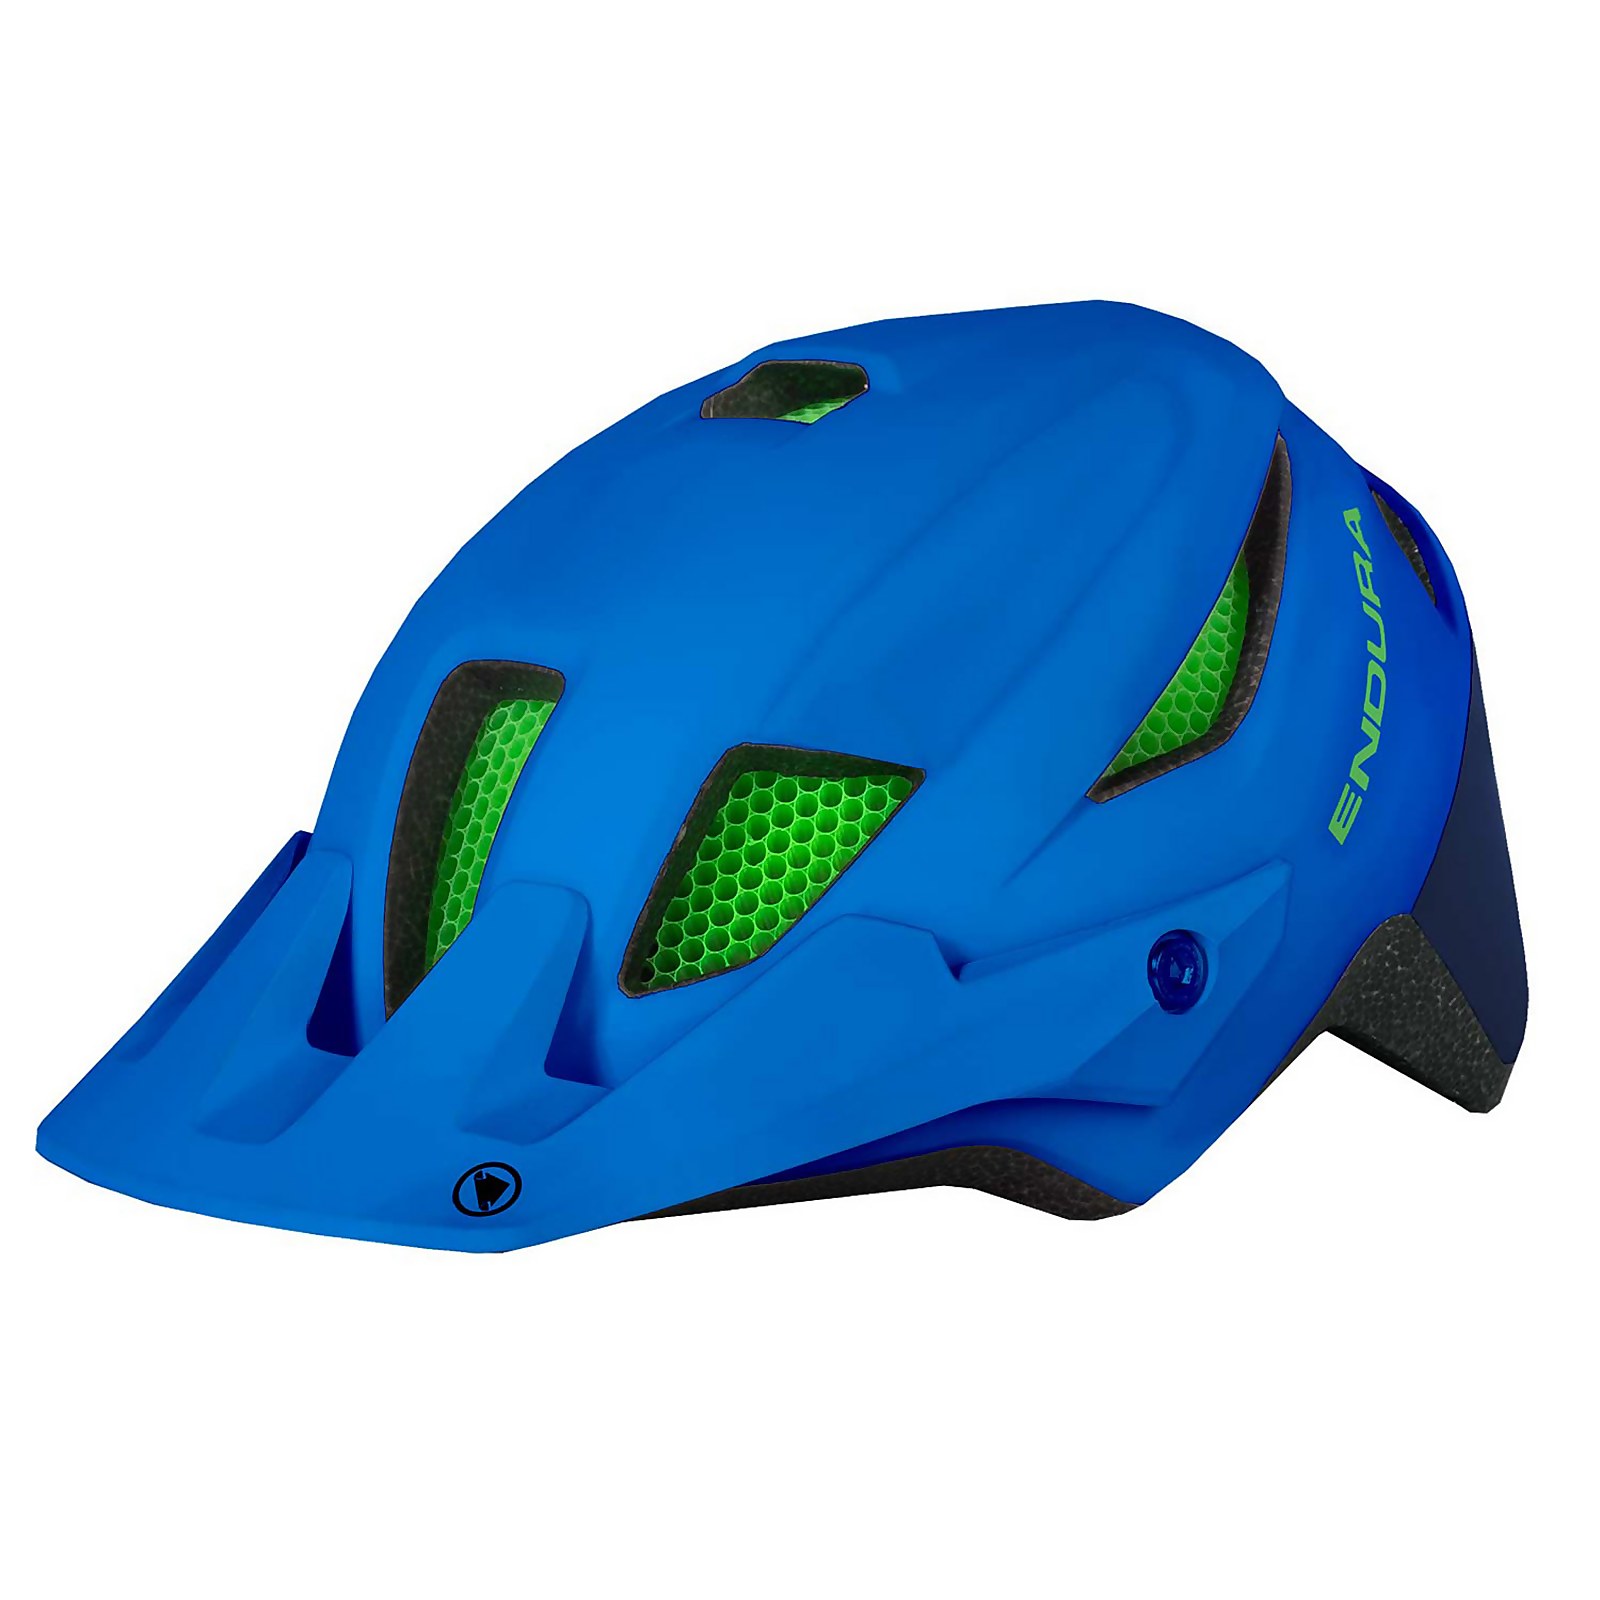 Mt500jr Youth Helmet - Azure Blue